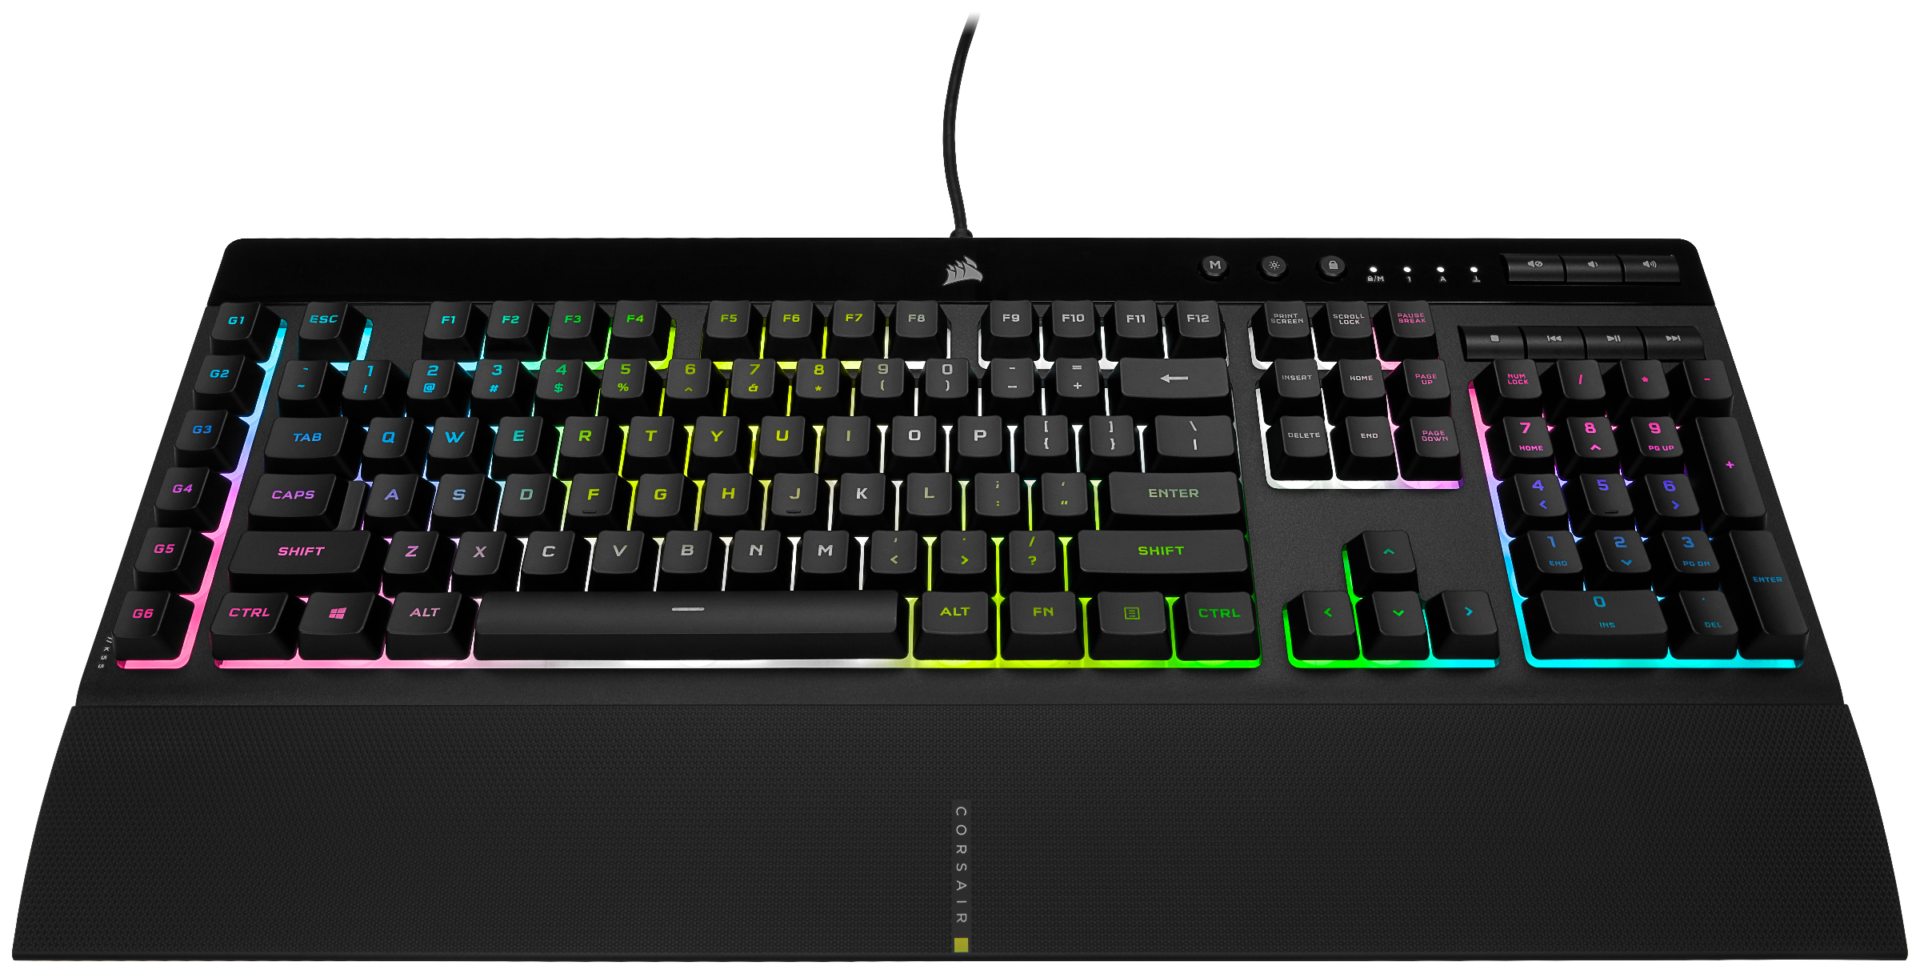 Corsair K55 RGB Pro XT gaming keyboard review: A typist's dream